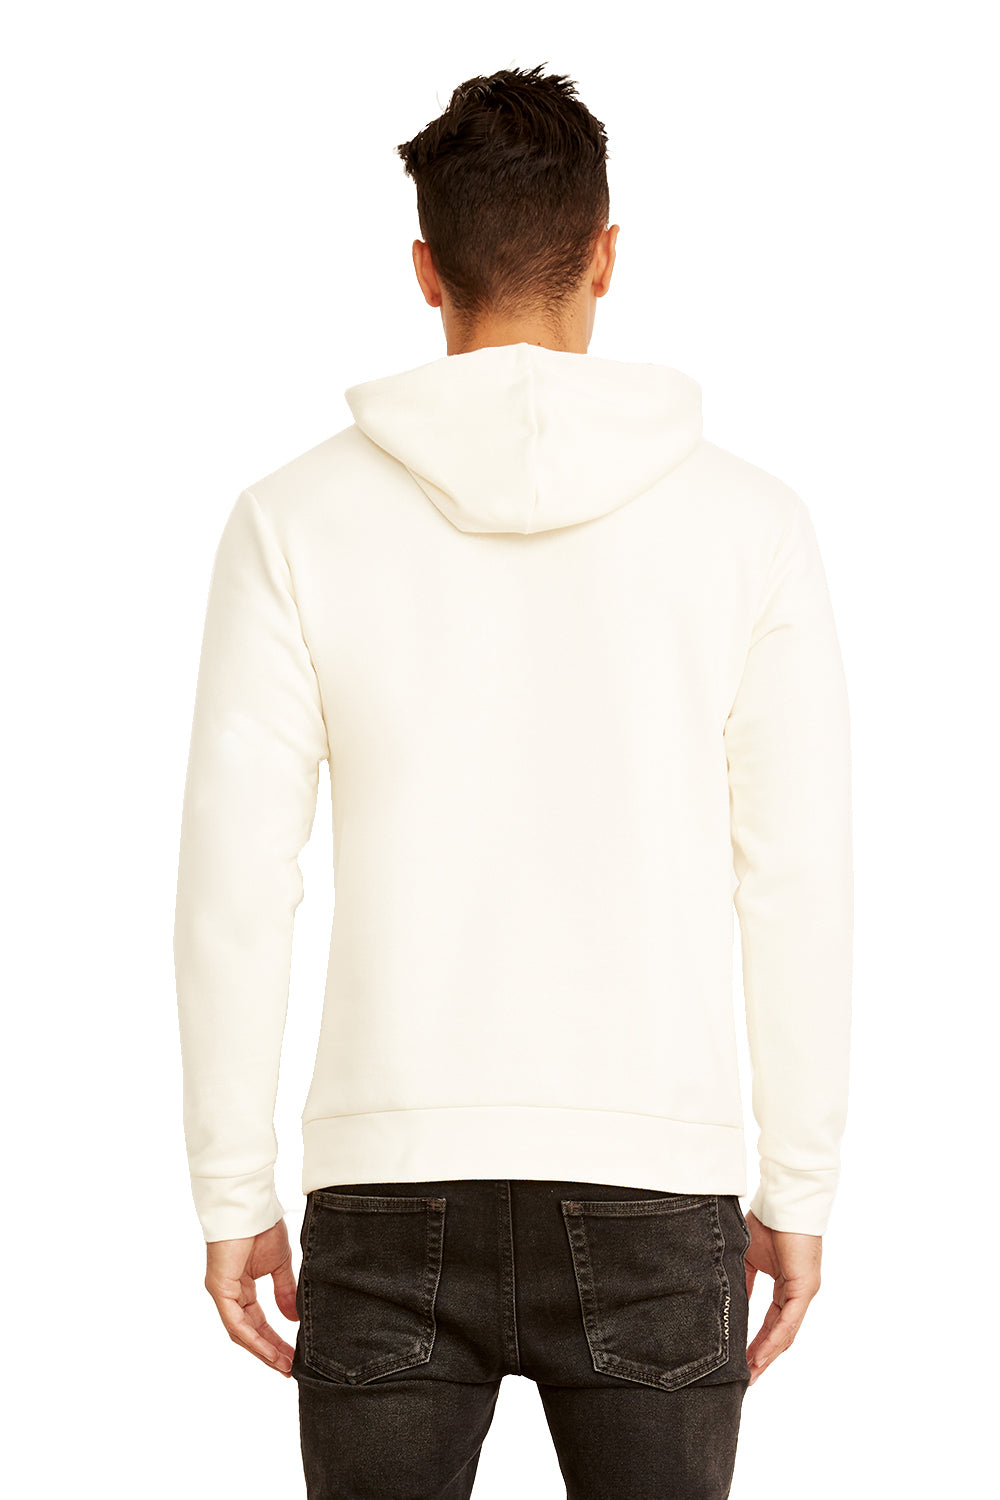 Next Level 9303 Mens Fleece Hooded Sweatshirt Hoodie Natural Back